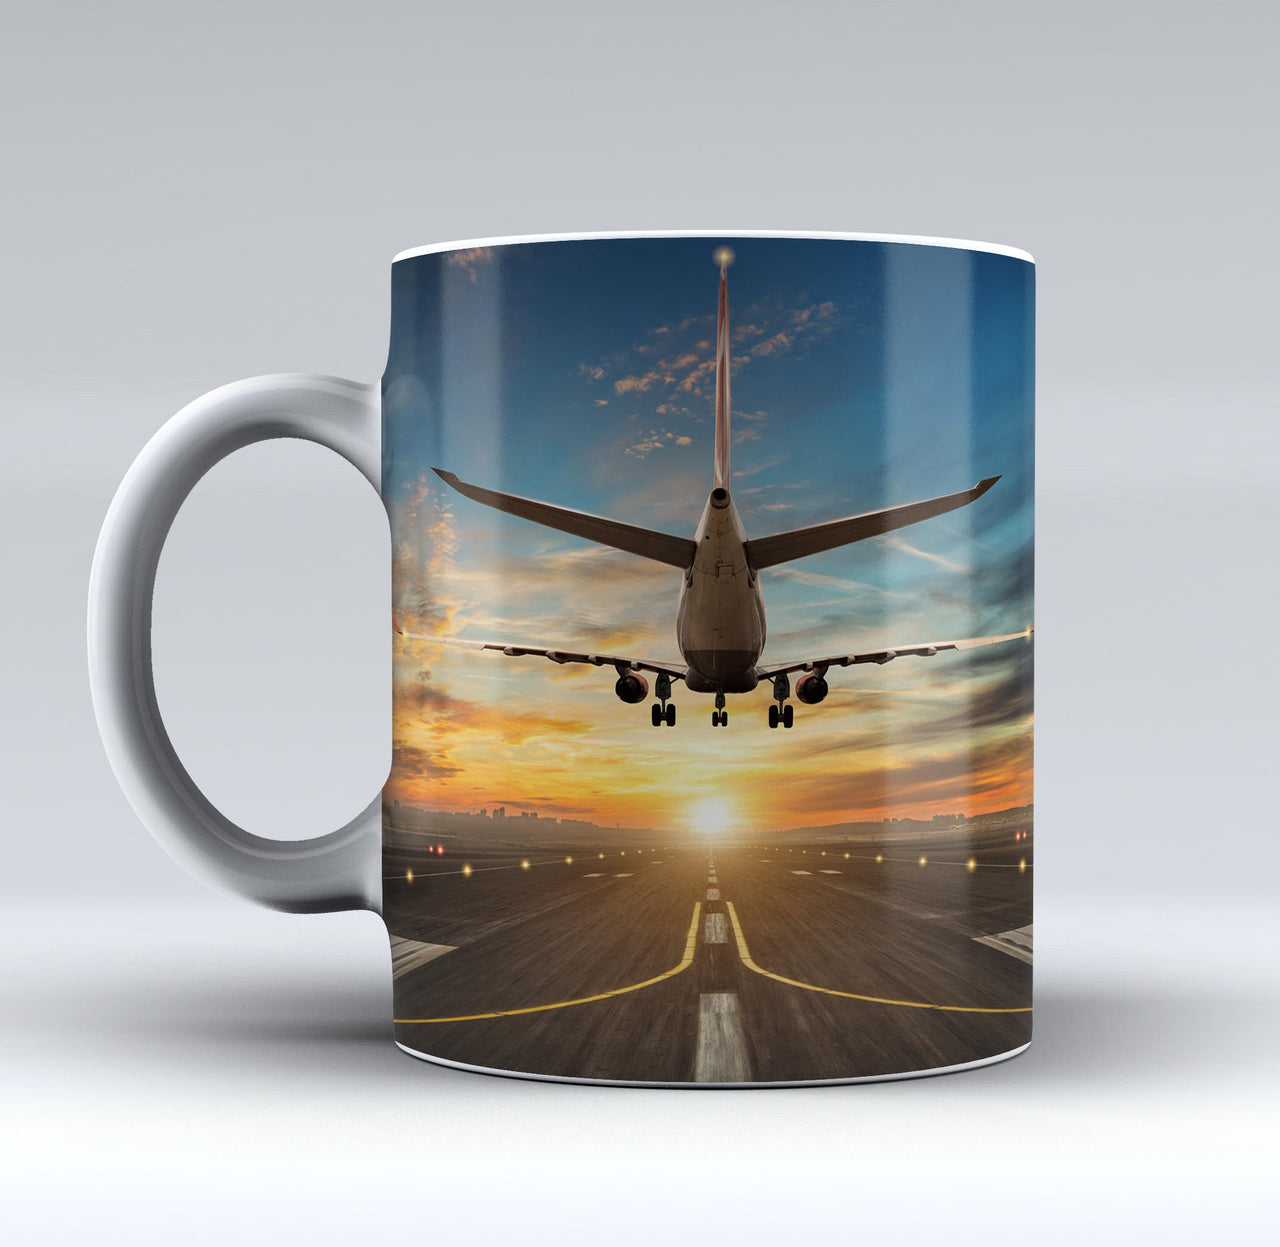 Airplane over Runway Towards the Sunrise Designed Mugs